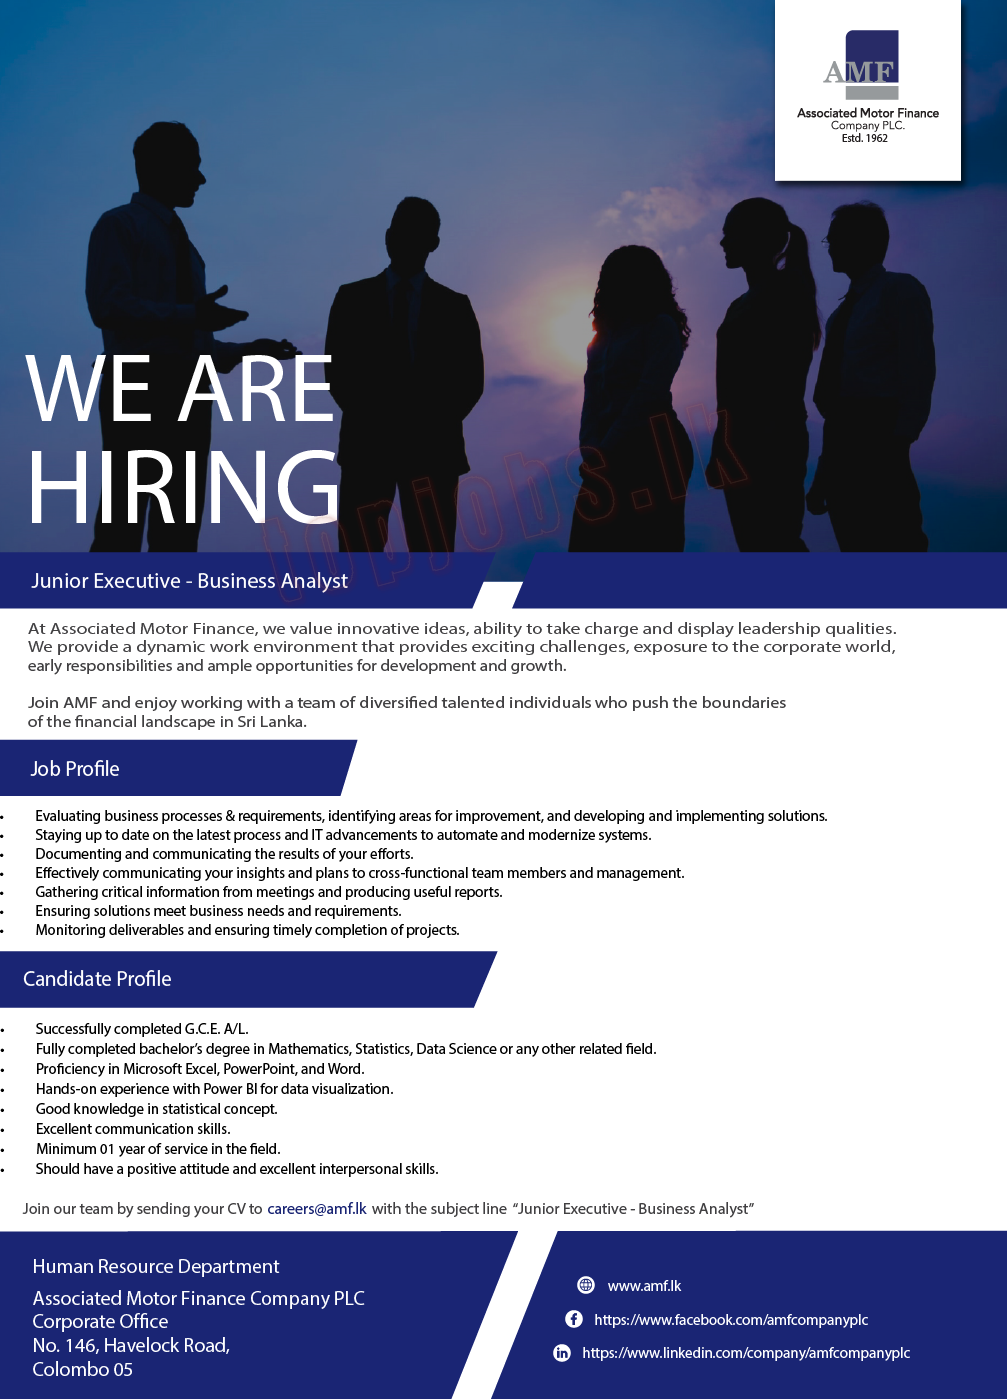 Junior Executive (Business Analyst) - Associated Motor Finance Company Jobs Vacancy